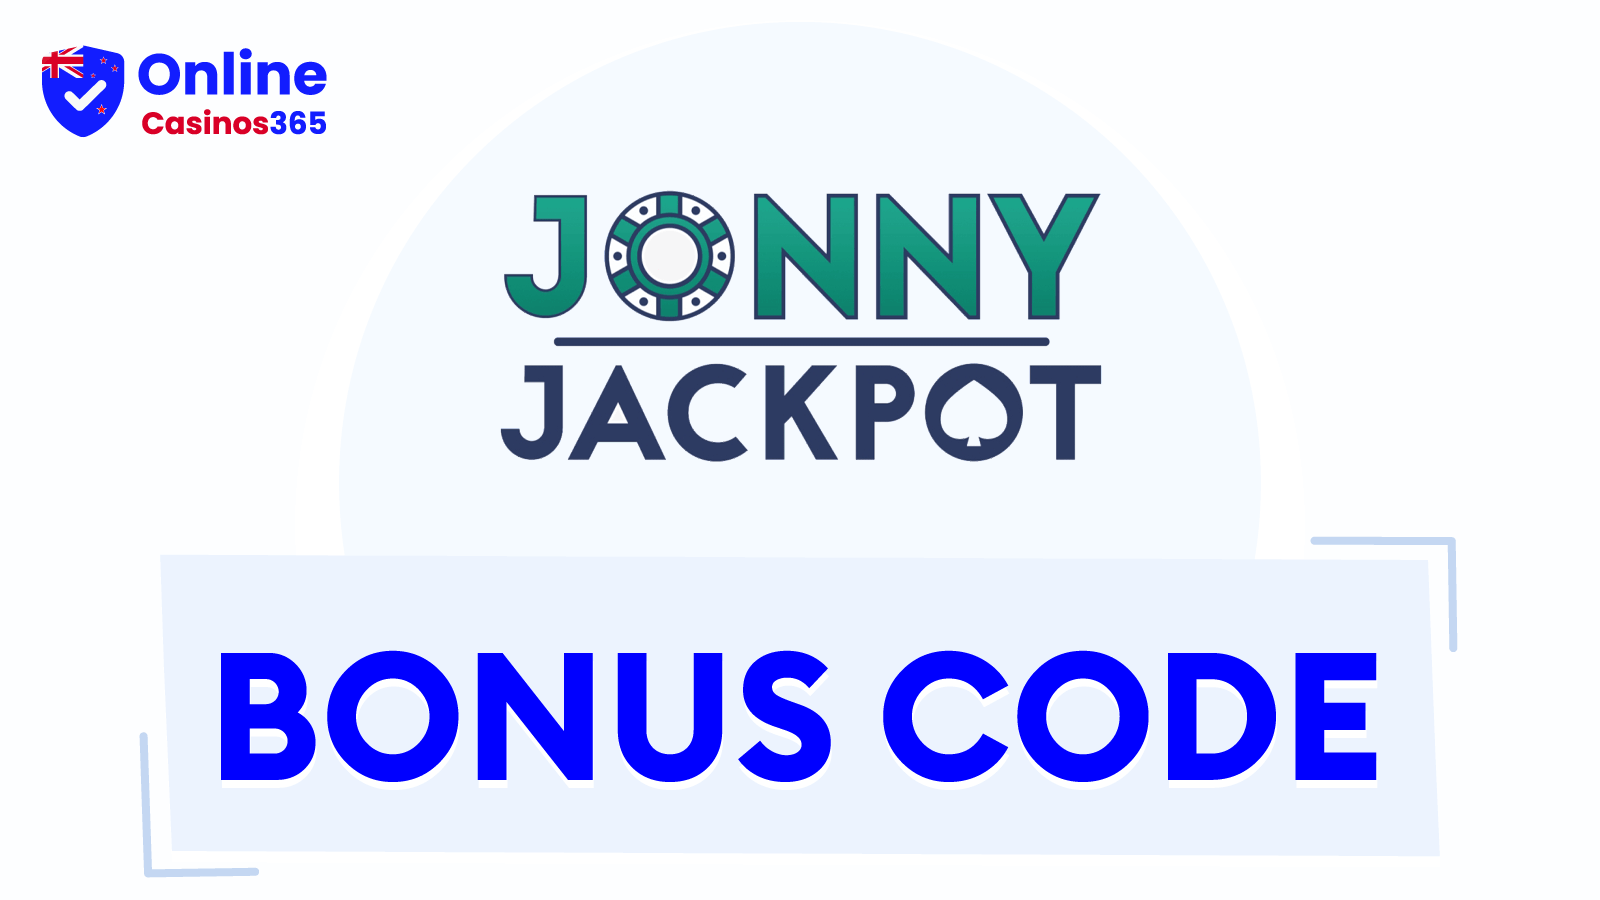 jonny jackpot no deposit bonus